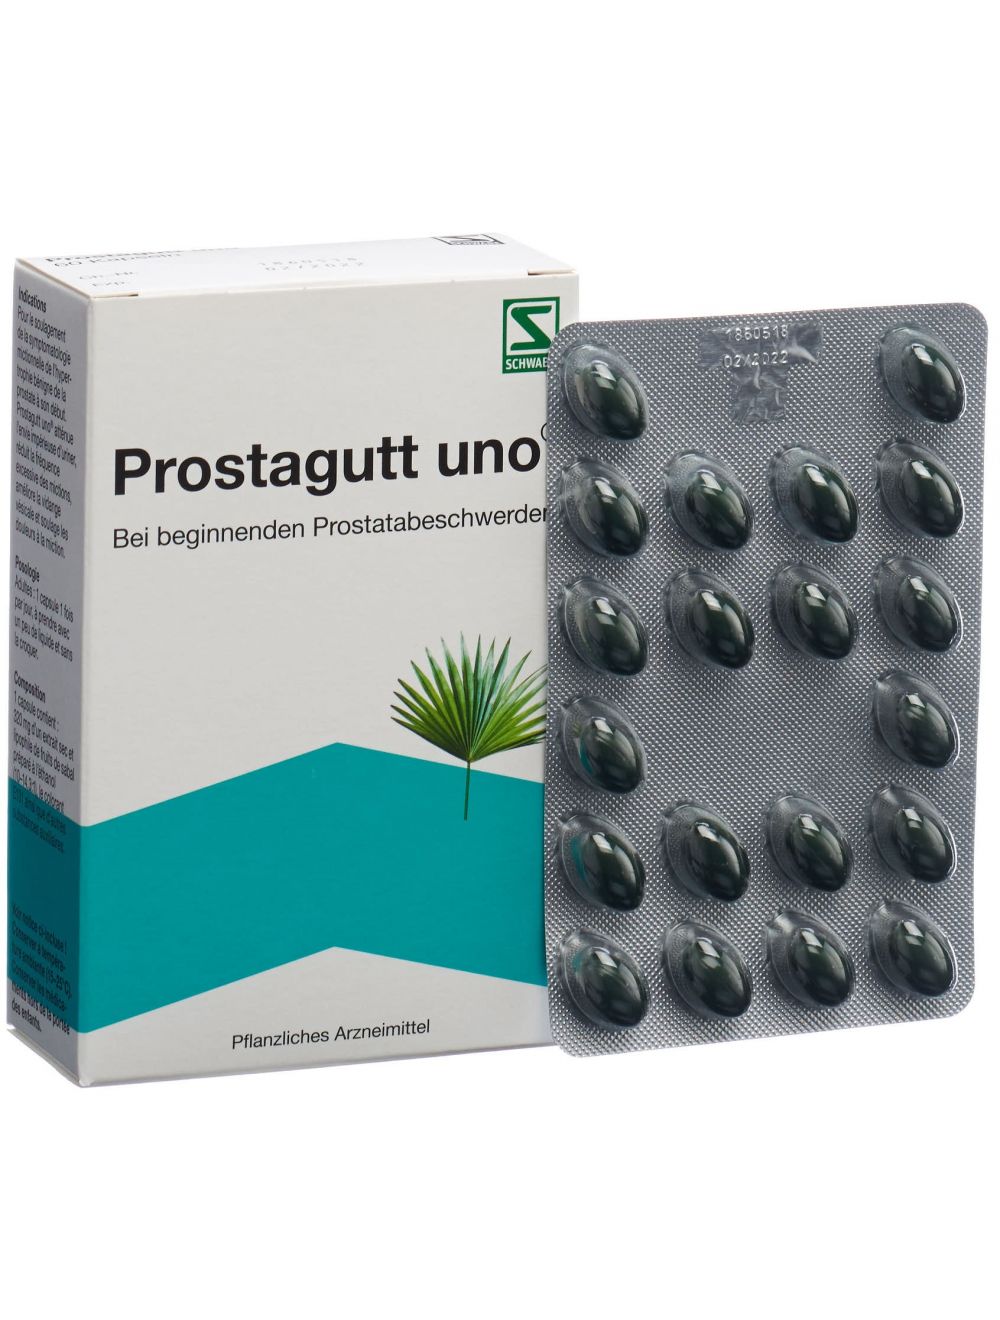 médicament prostate sans ordonnance en pharmacie)